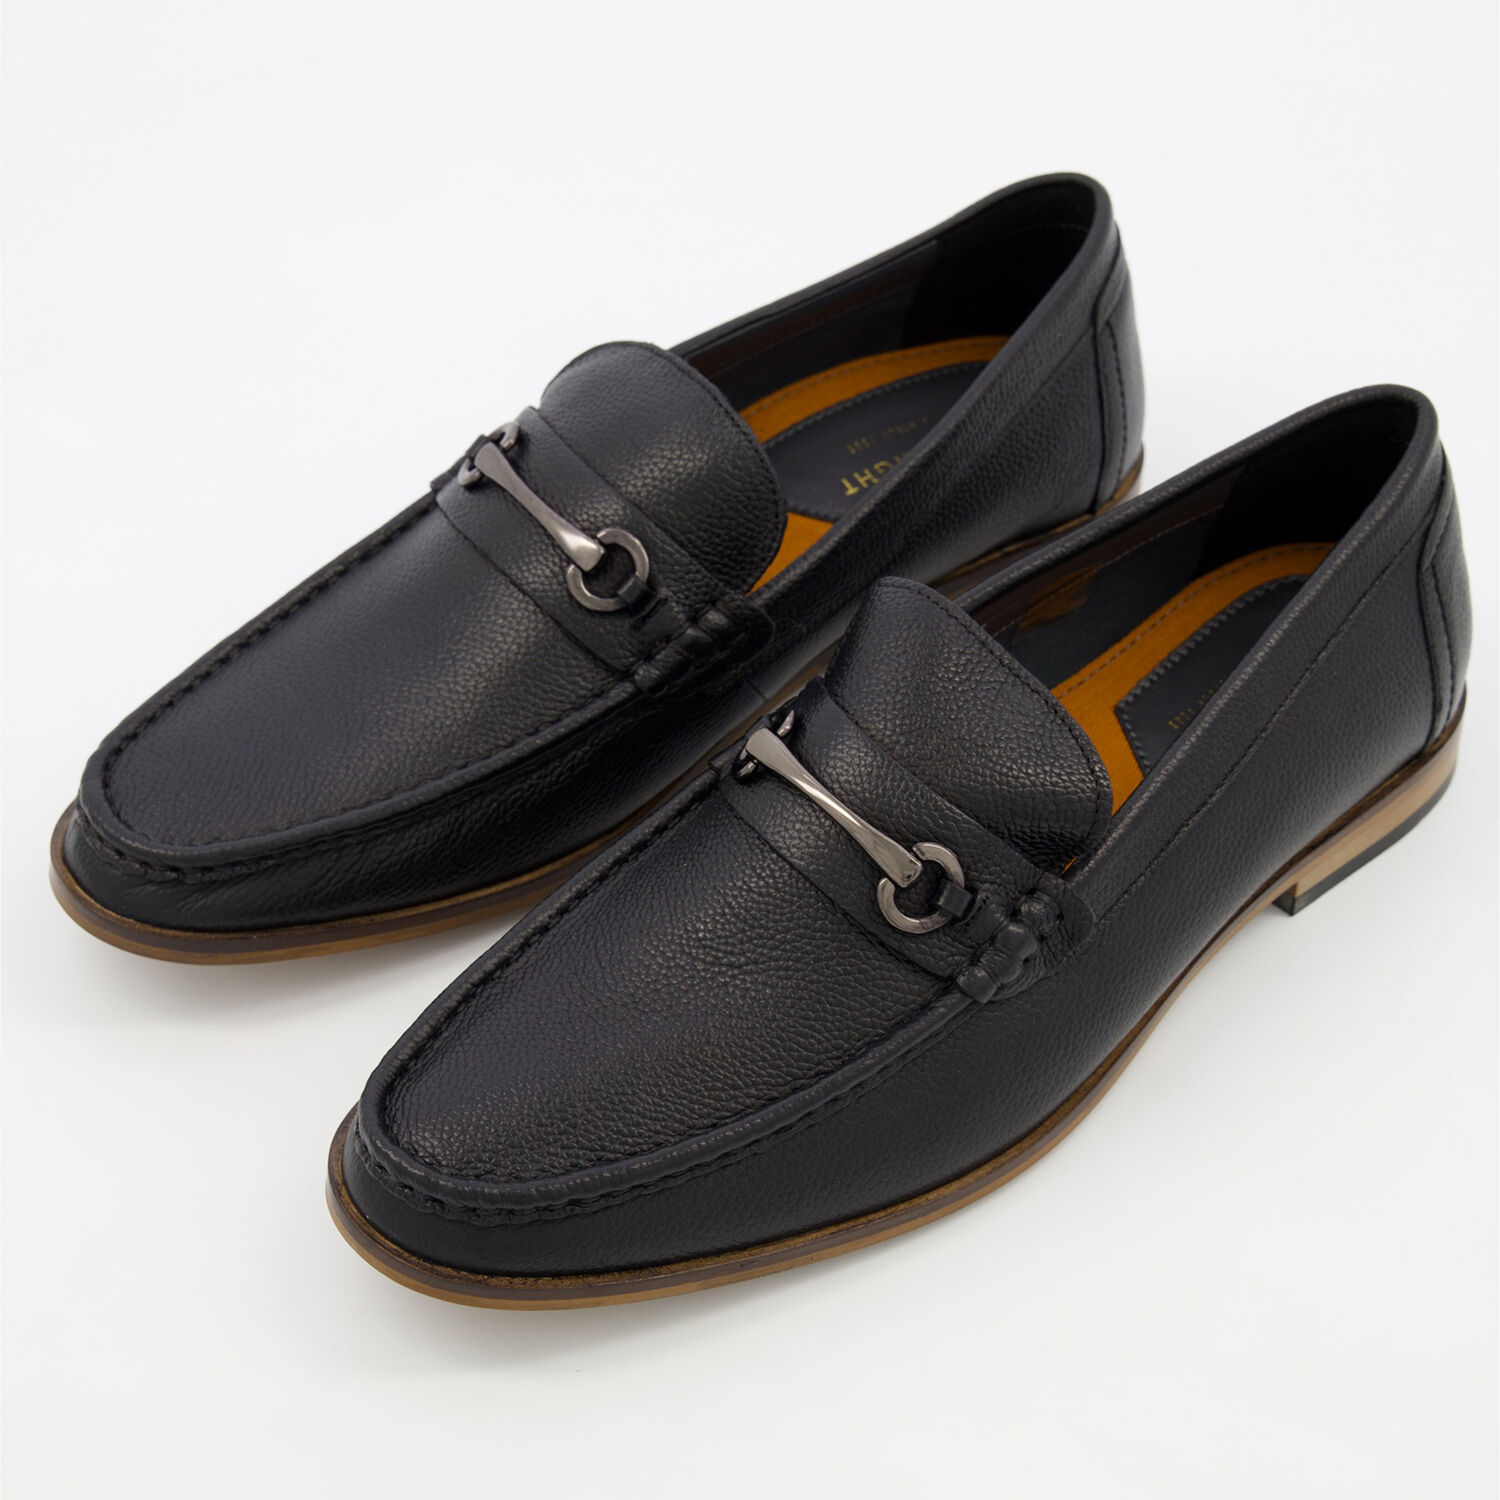 Black Leather Loafers - TK Maxx UK